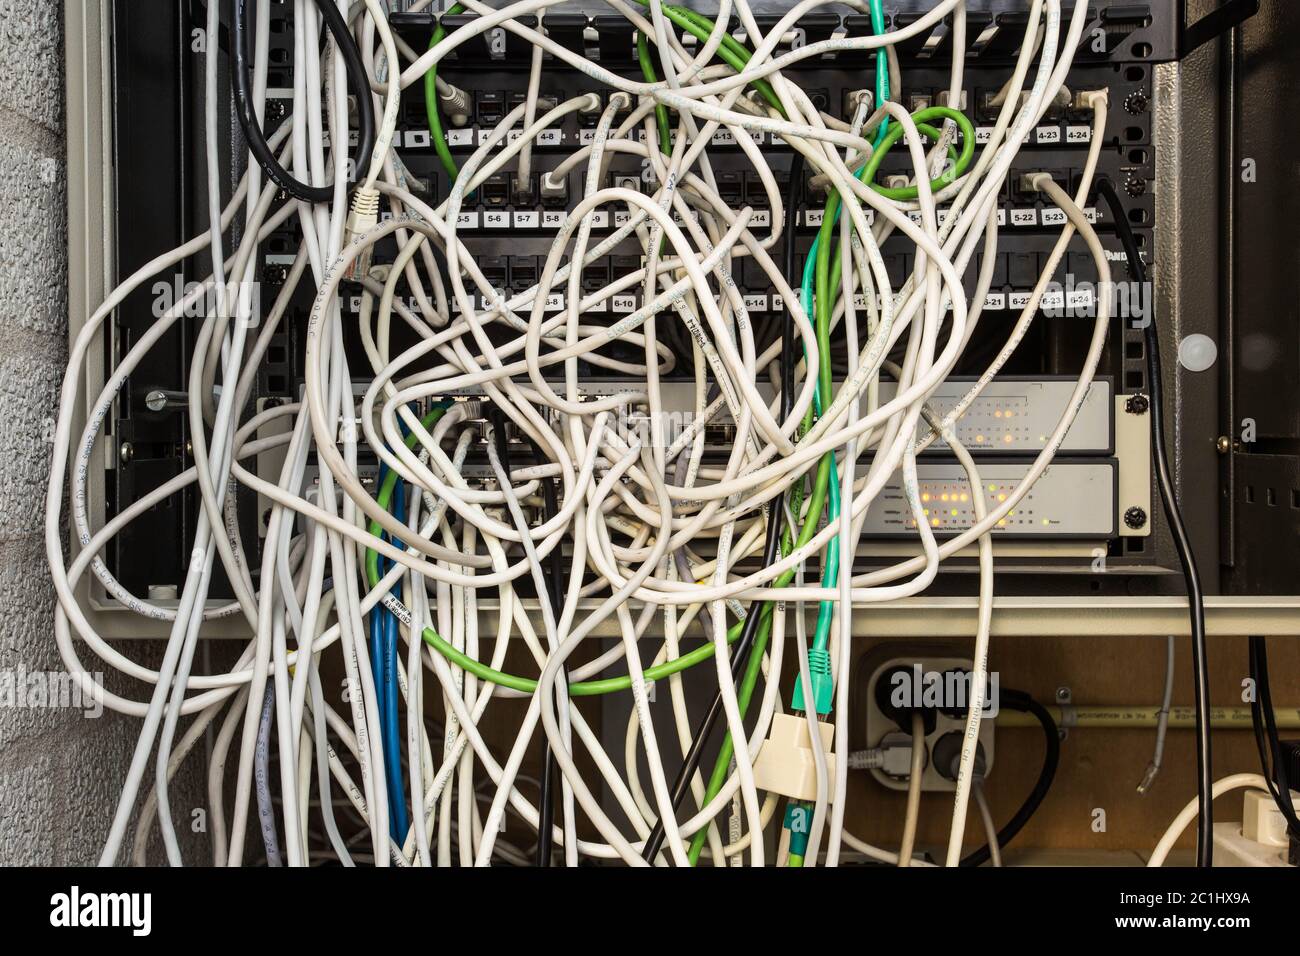 El caos de los cables de red se enredó Foto de stock